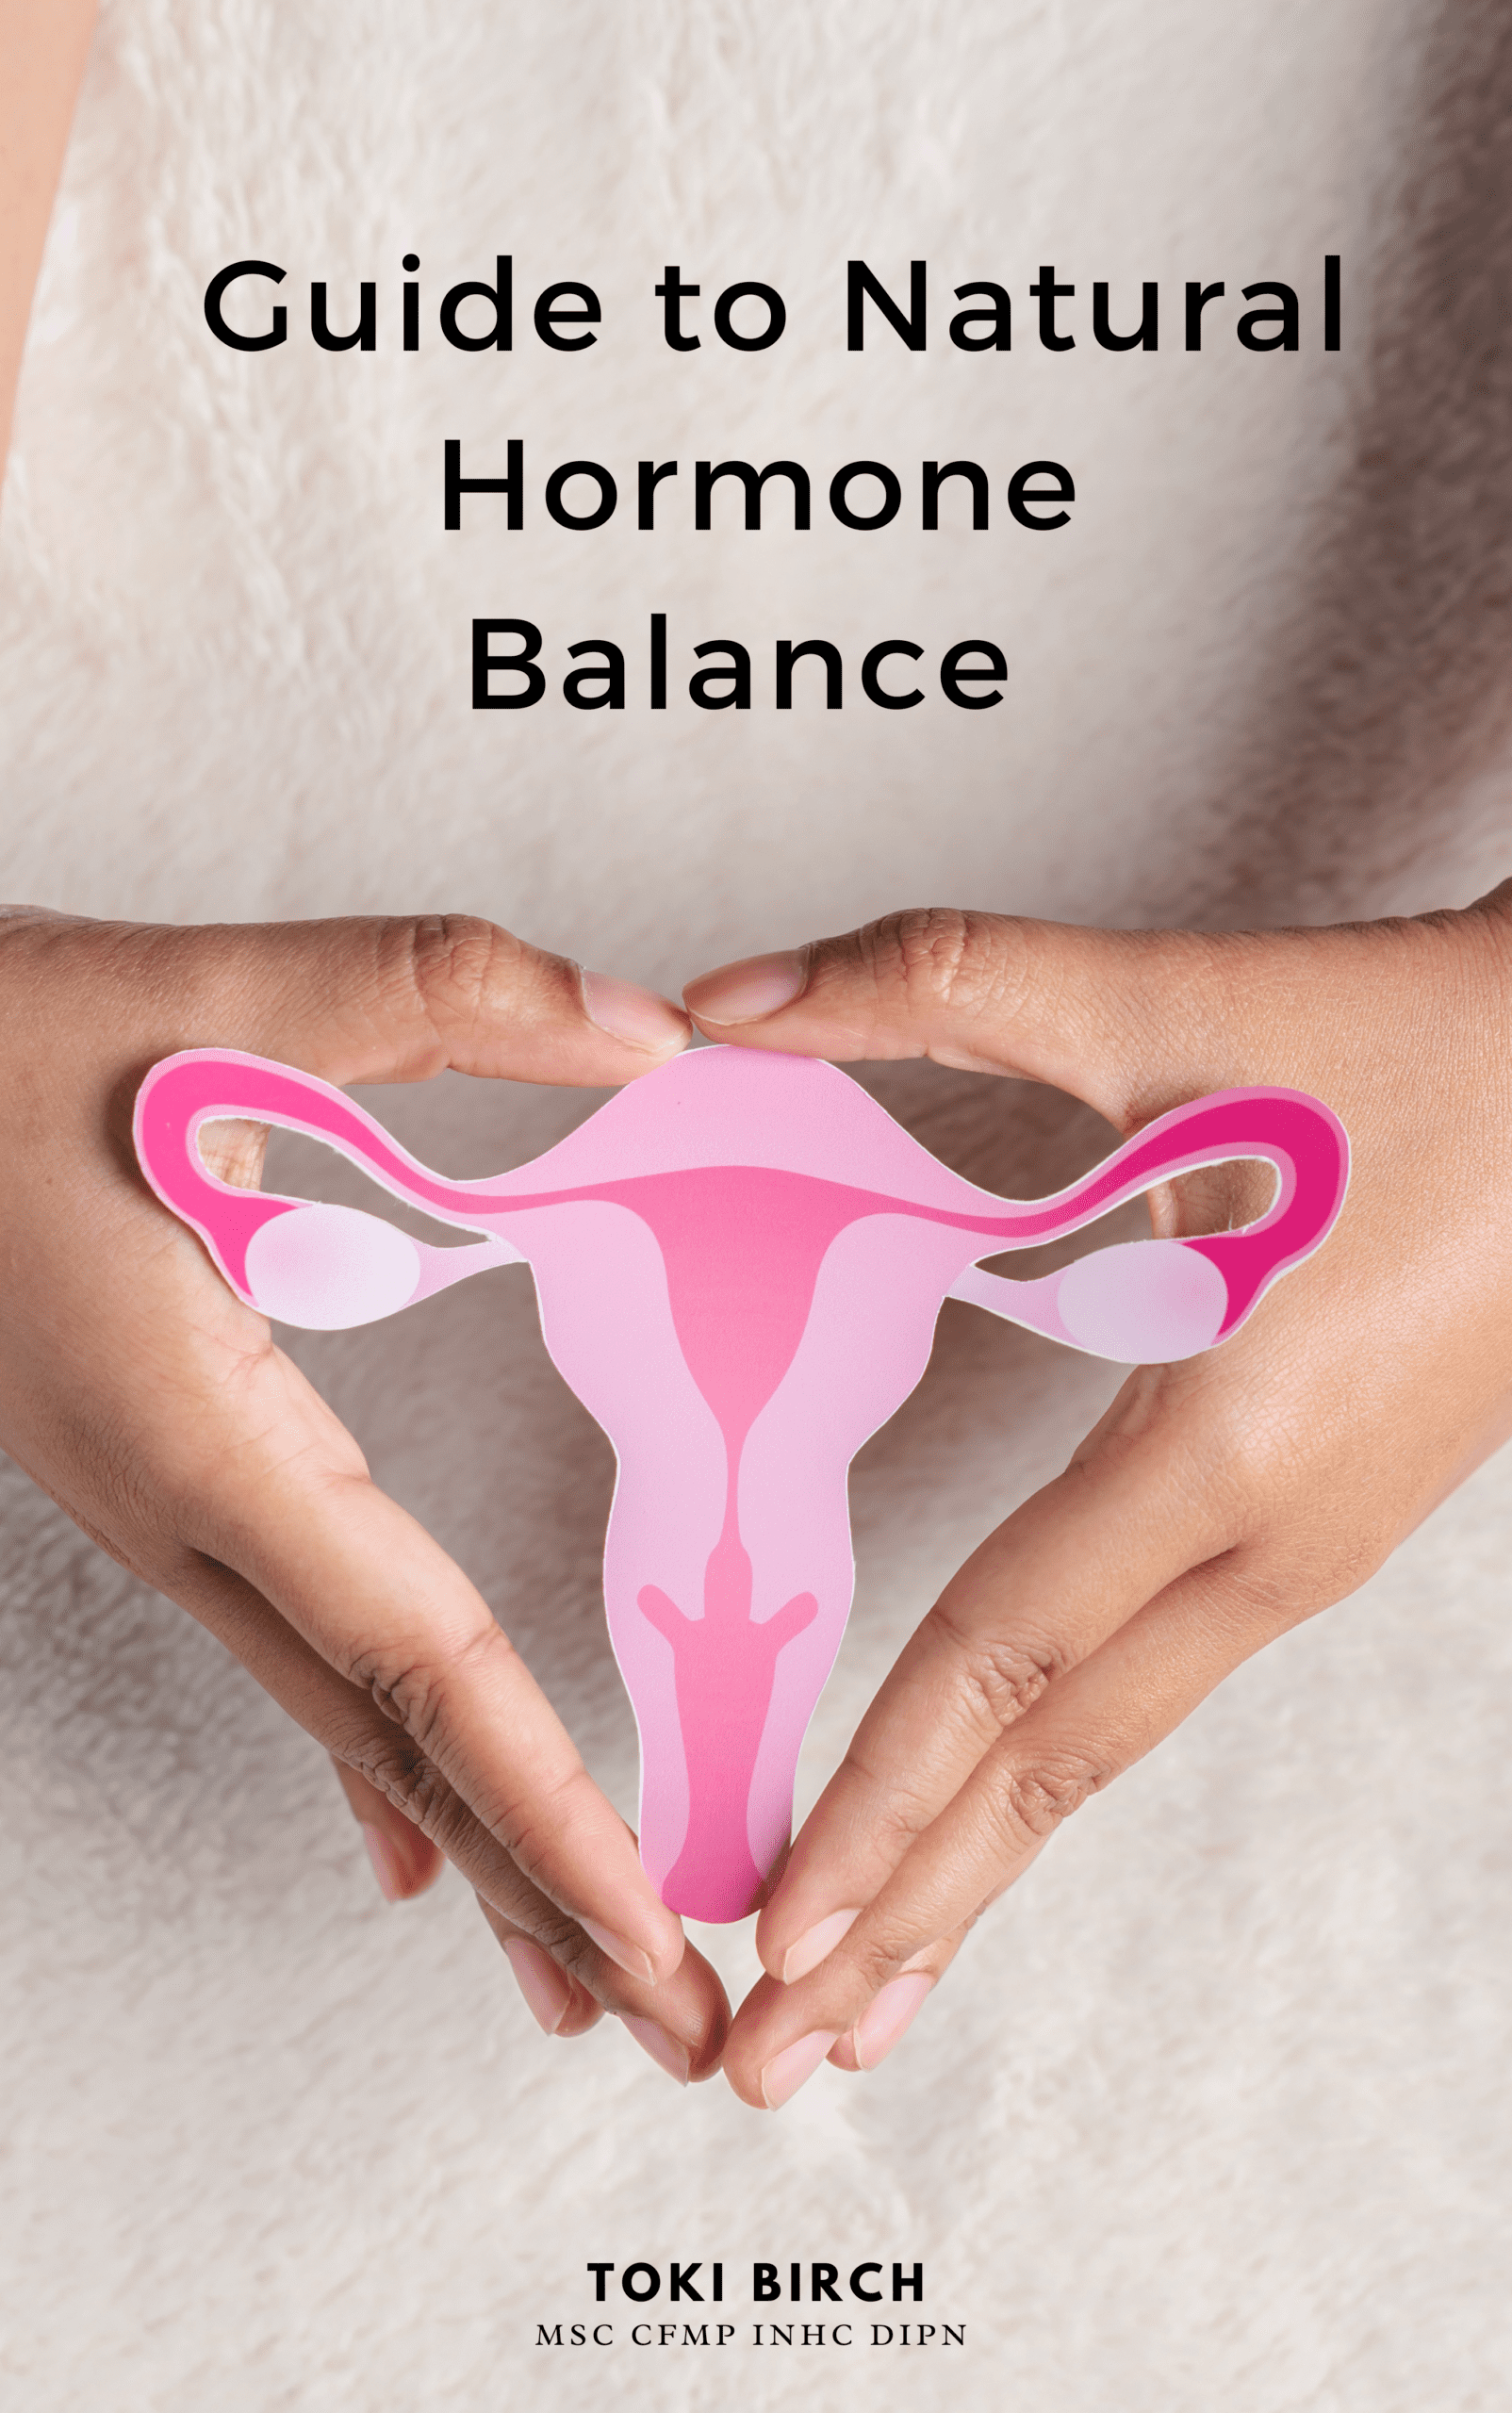 BALANCE YOUR HORMONES